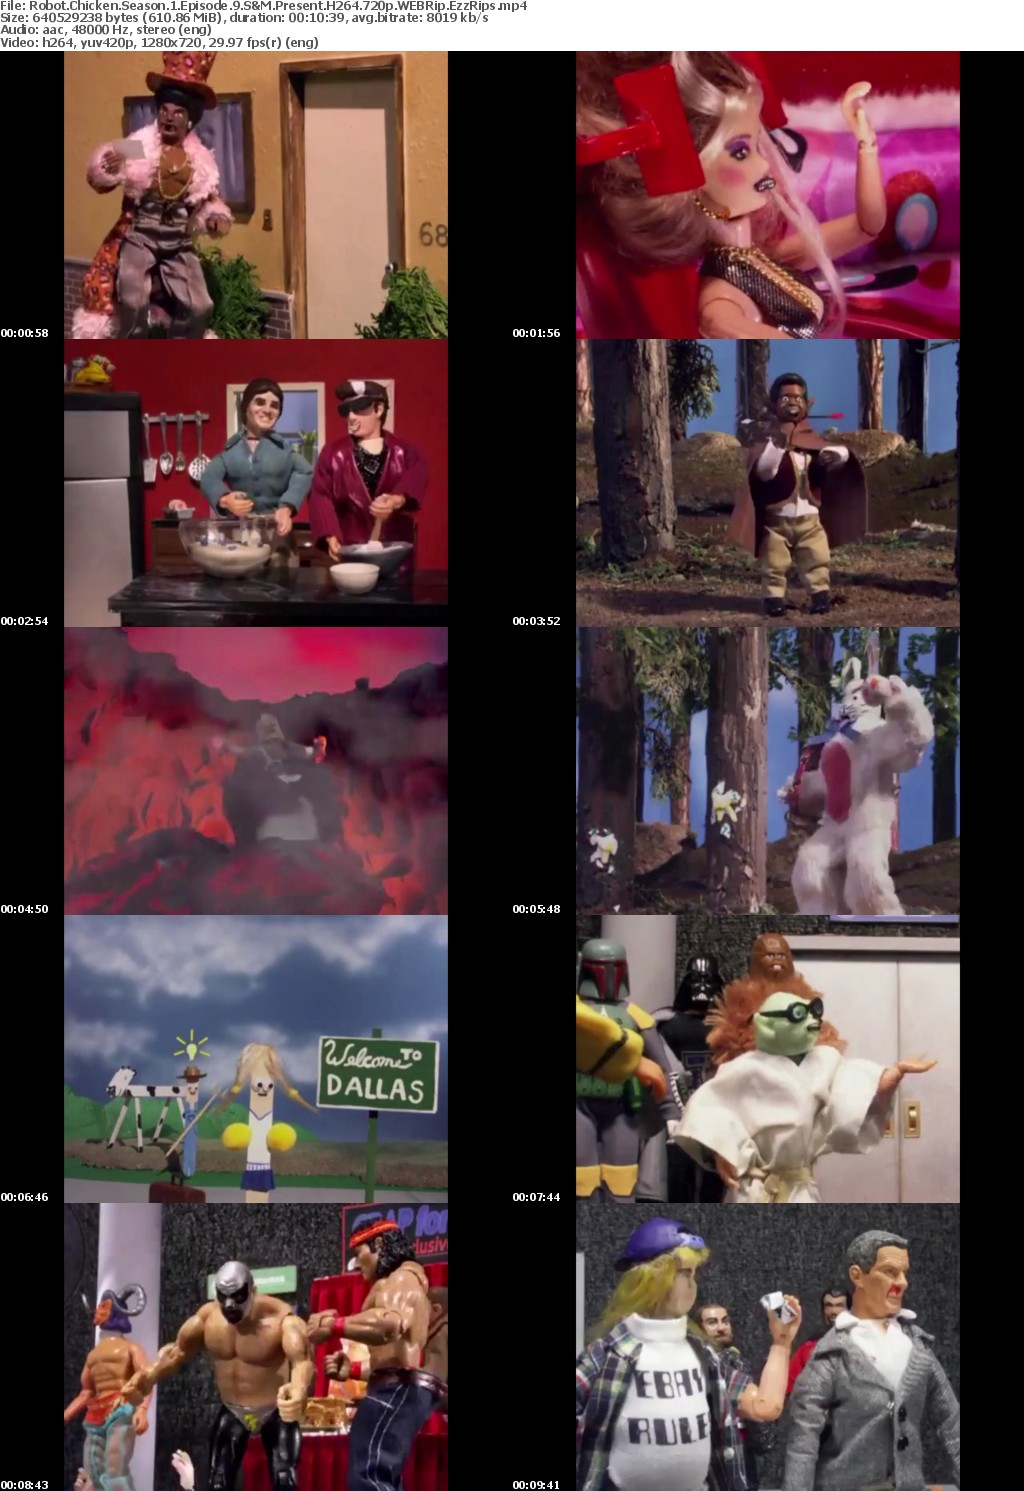 Robot Chicken Season 1 Episode 9 S M Present H264 720p WEBRip EzzRips